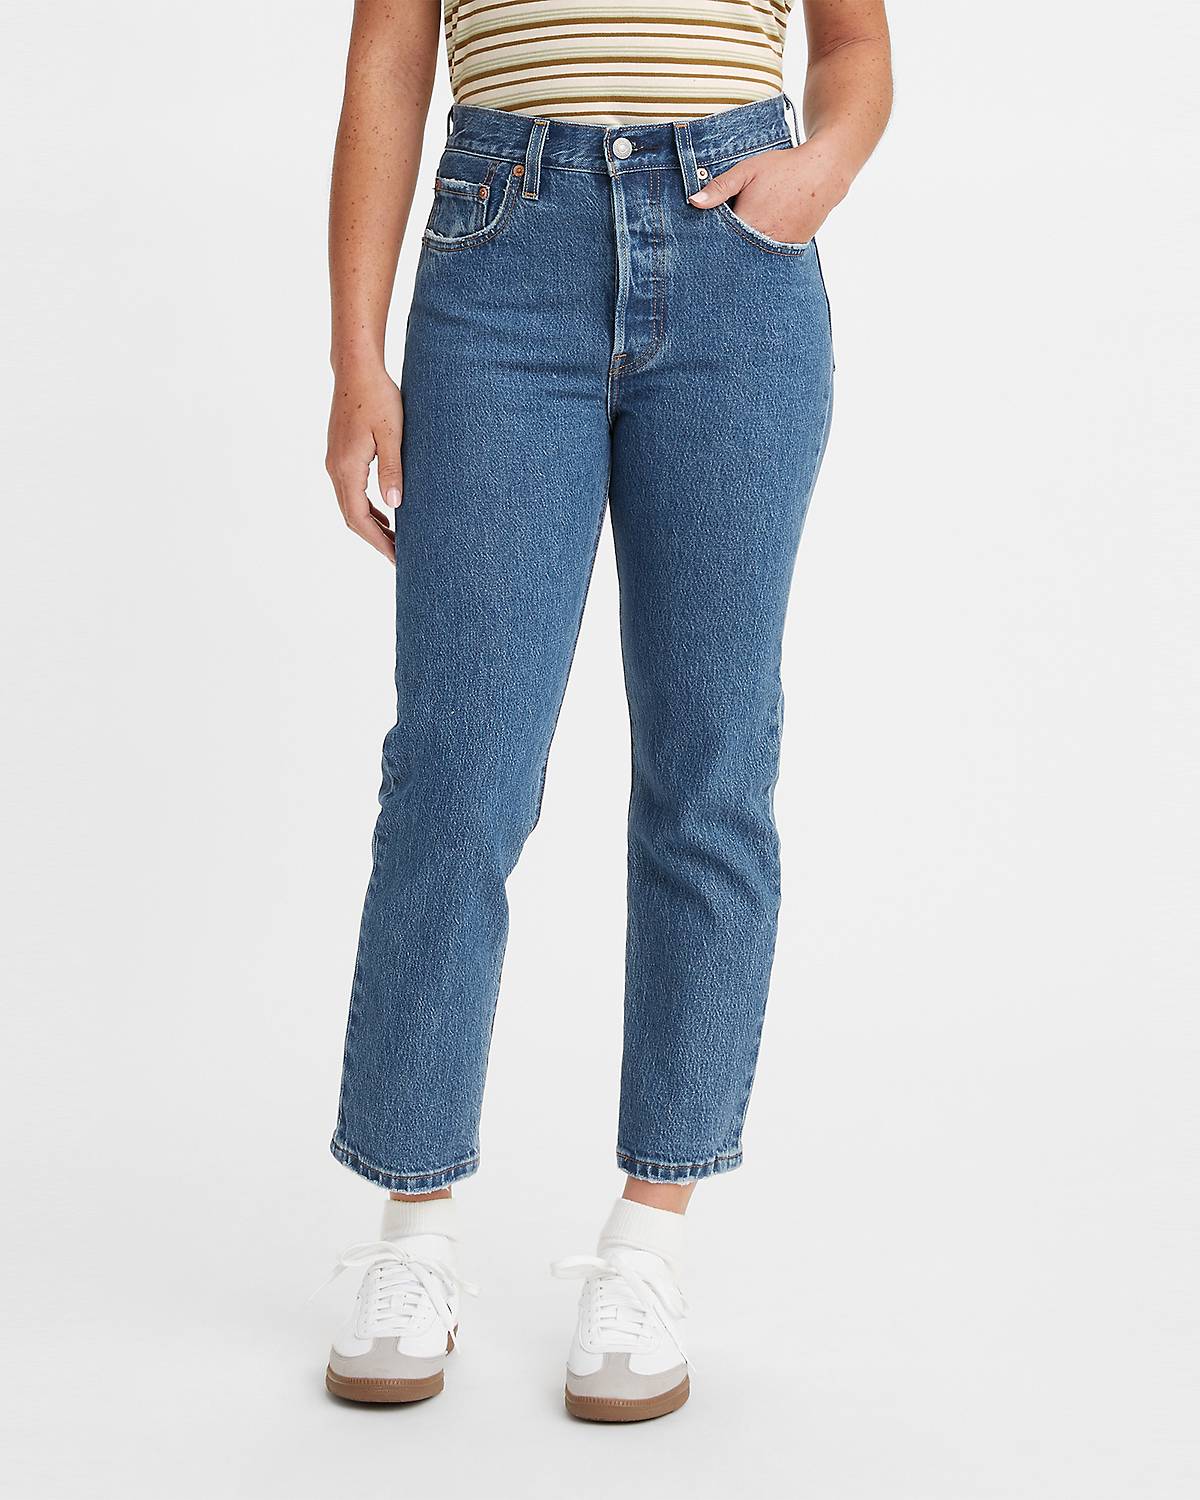 Model wearing 501® Original Crop jeans